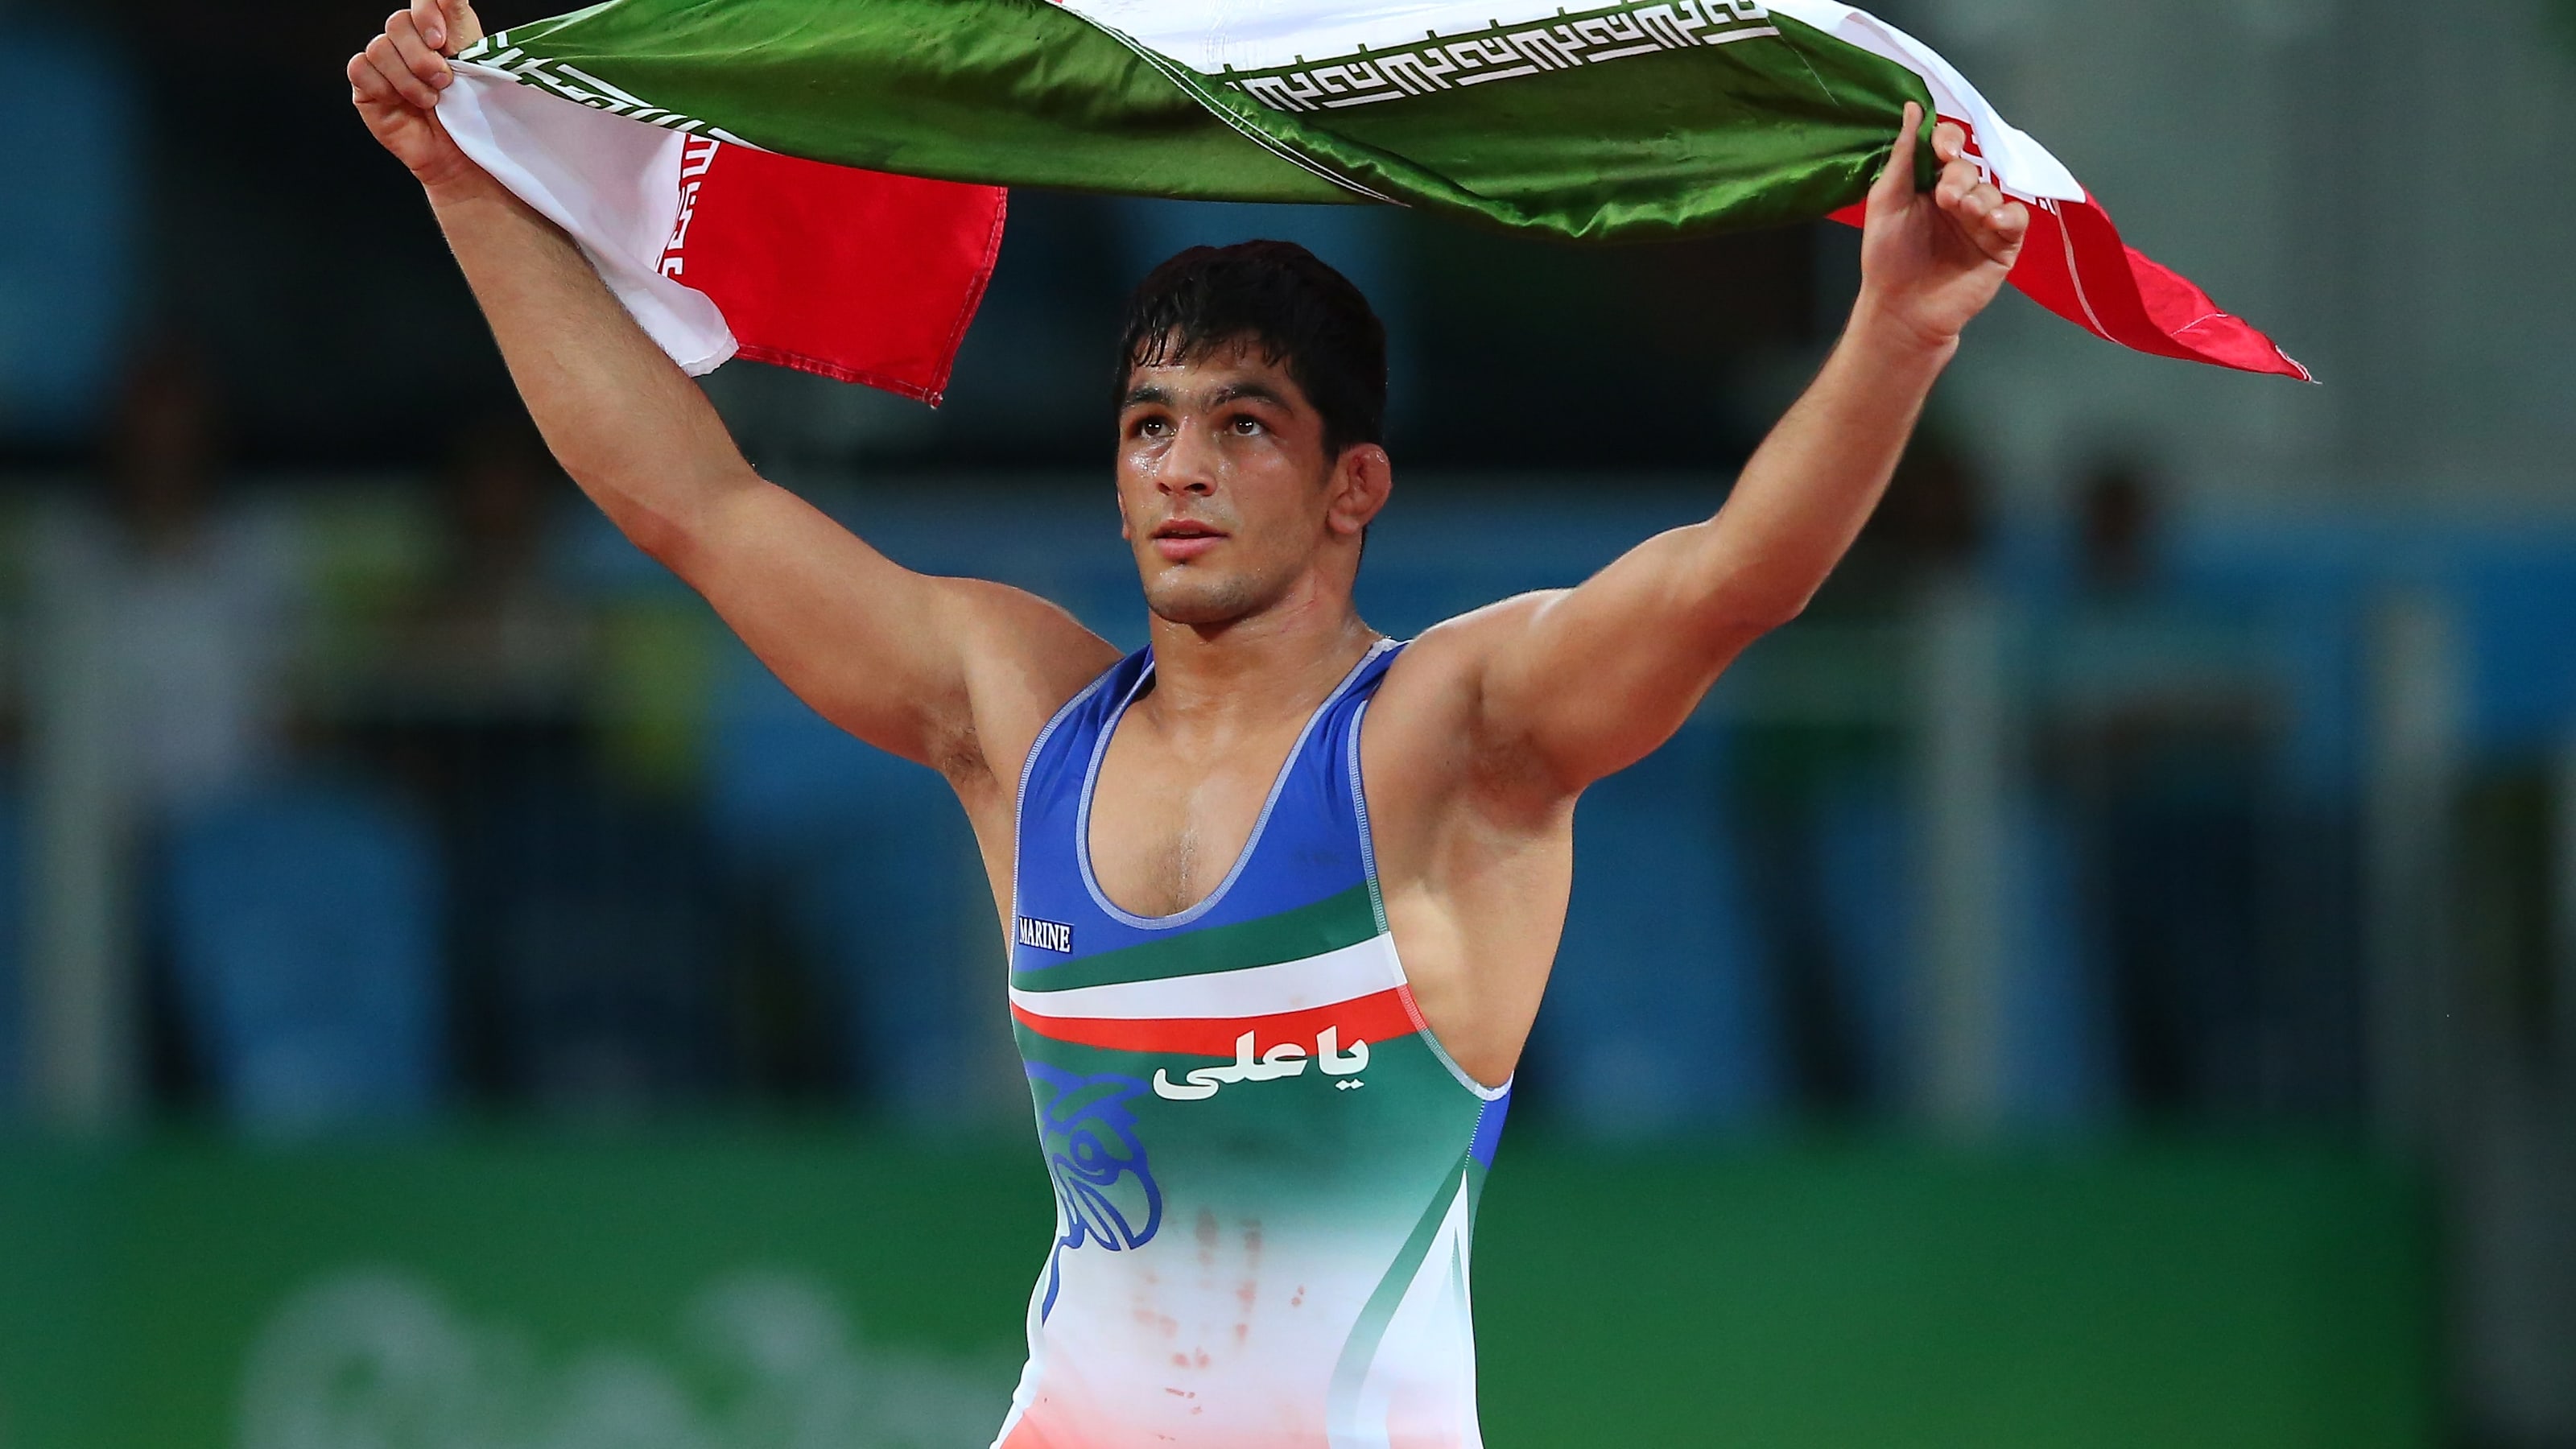 Iran's 'Greatest' Hassan Yazdani seeks wrestling immortality